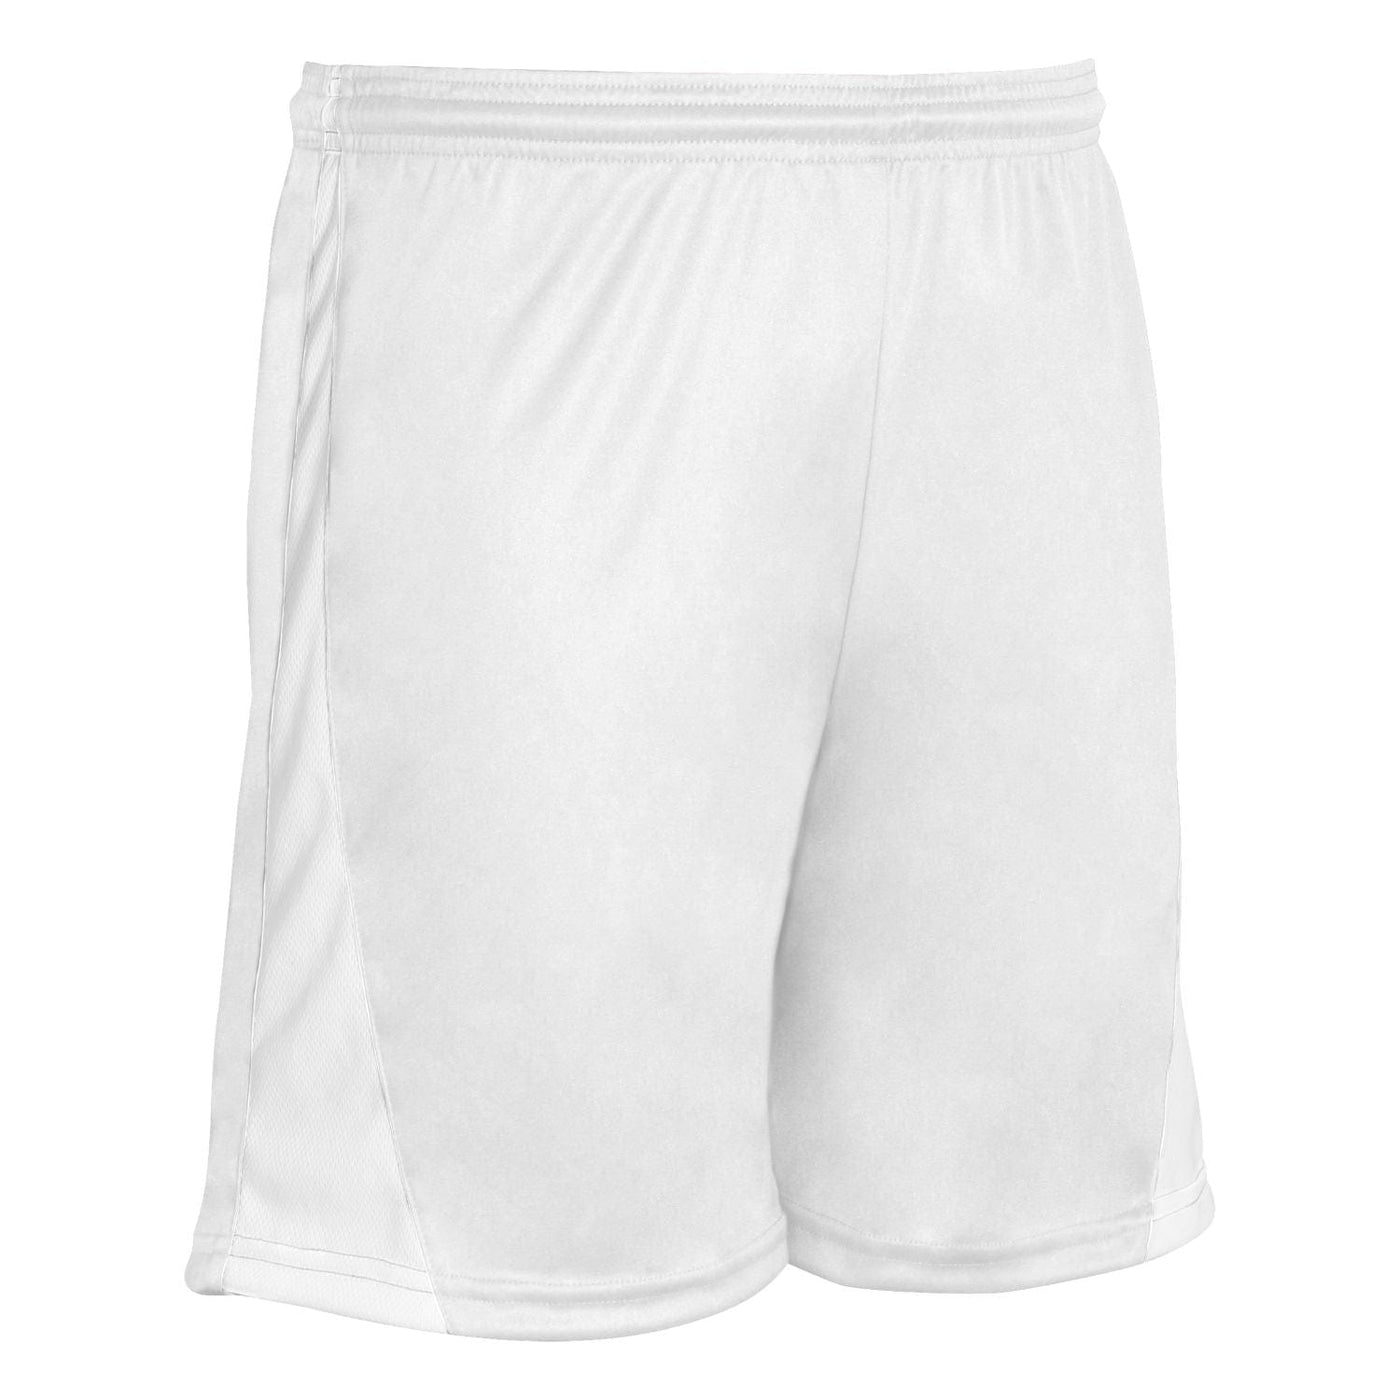 Champro Champro Adult Sweeper Soccer Shorts White White White White / Large Sports